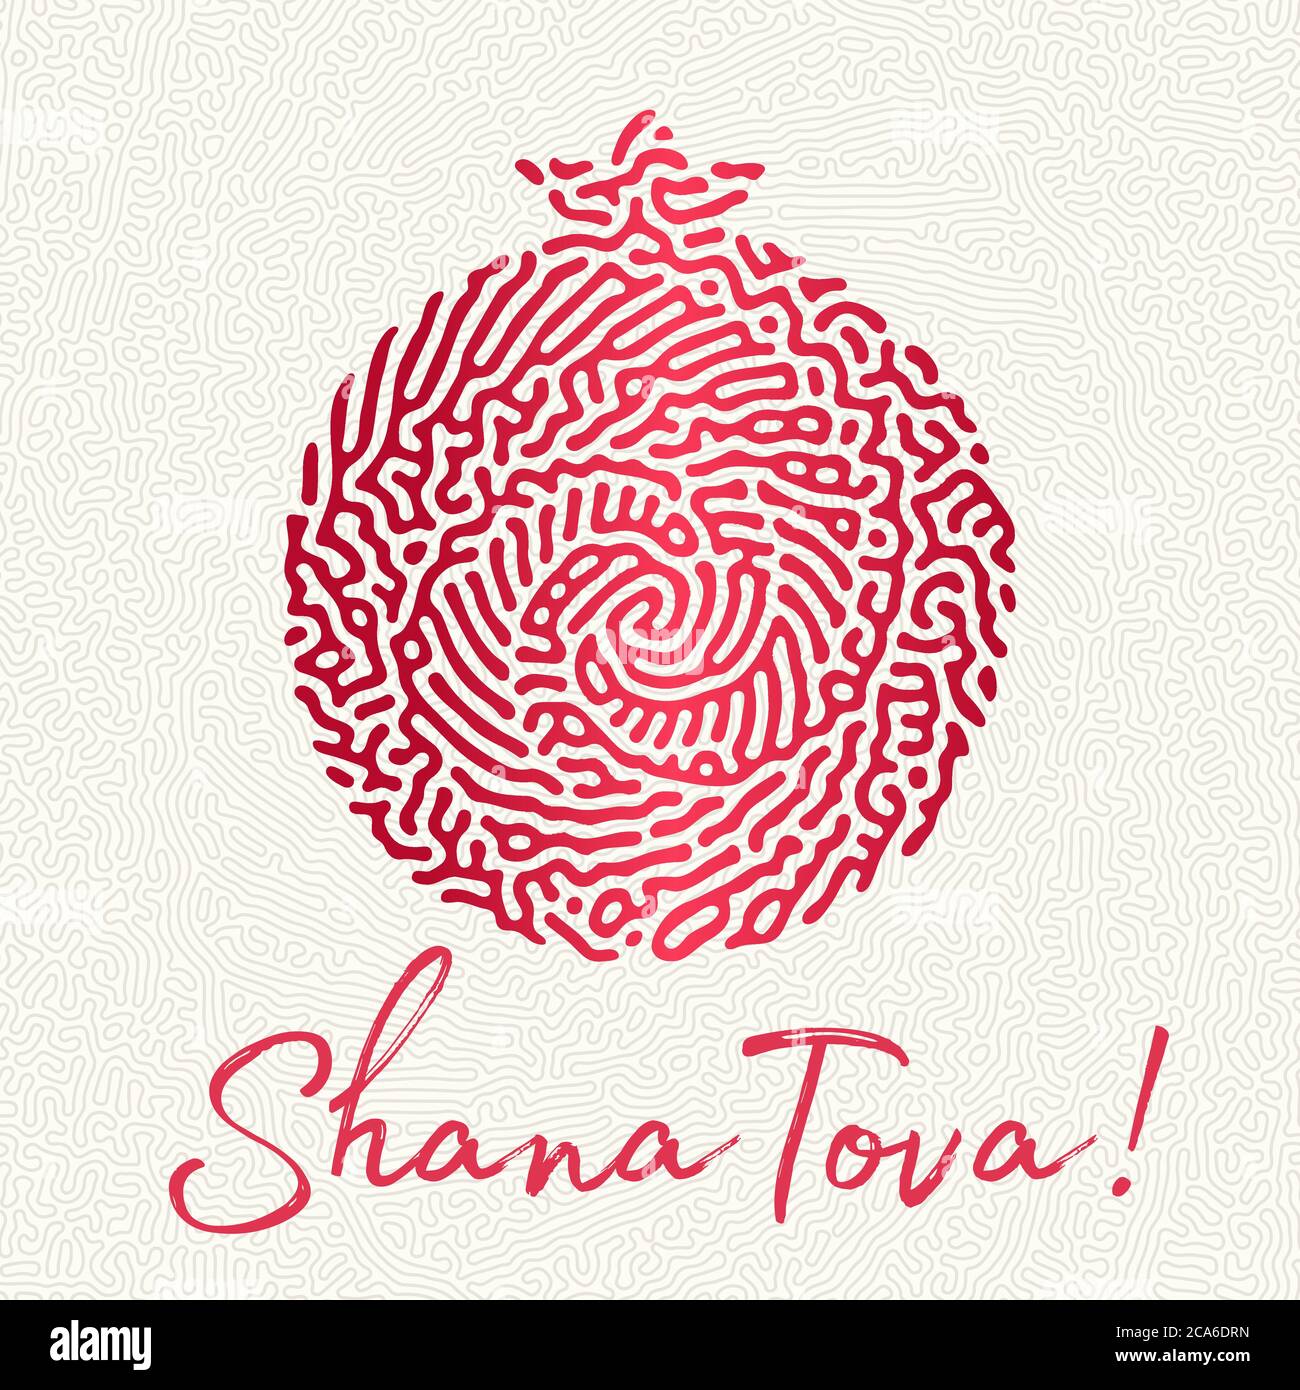 Rosh Hashanah Hashana greeting card, Jewish New Year. Shana tova on Hebrew, Have a good year. Patterned pomegranate icon vector illustration. Ripe gar Stock Vector